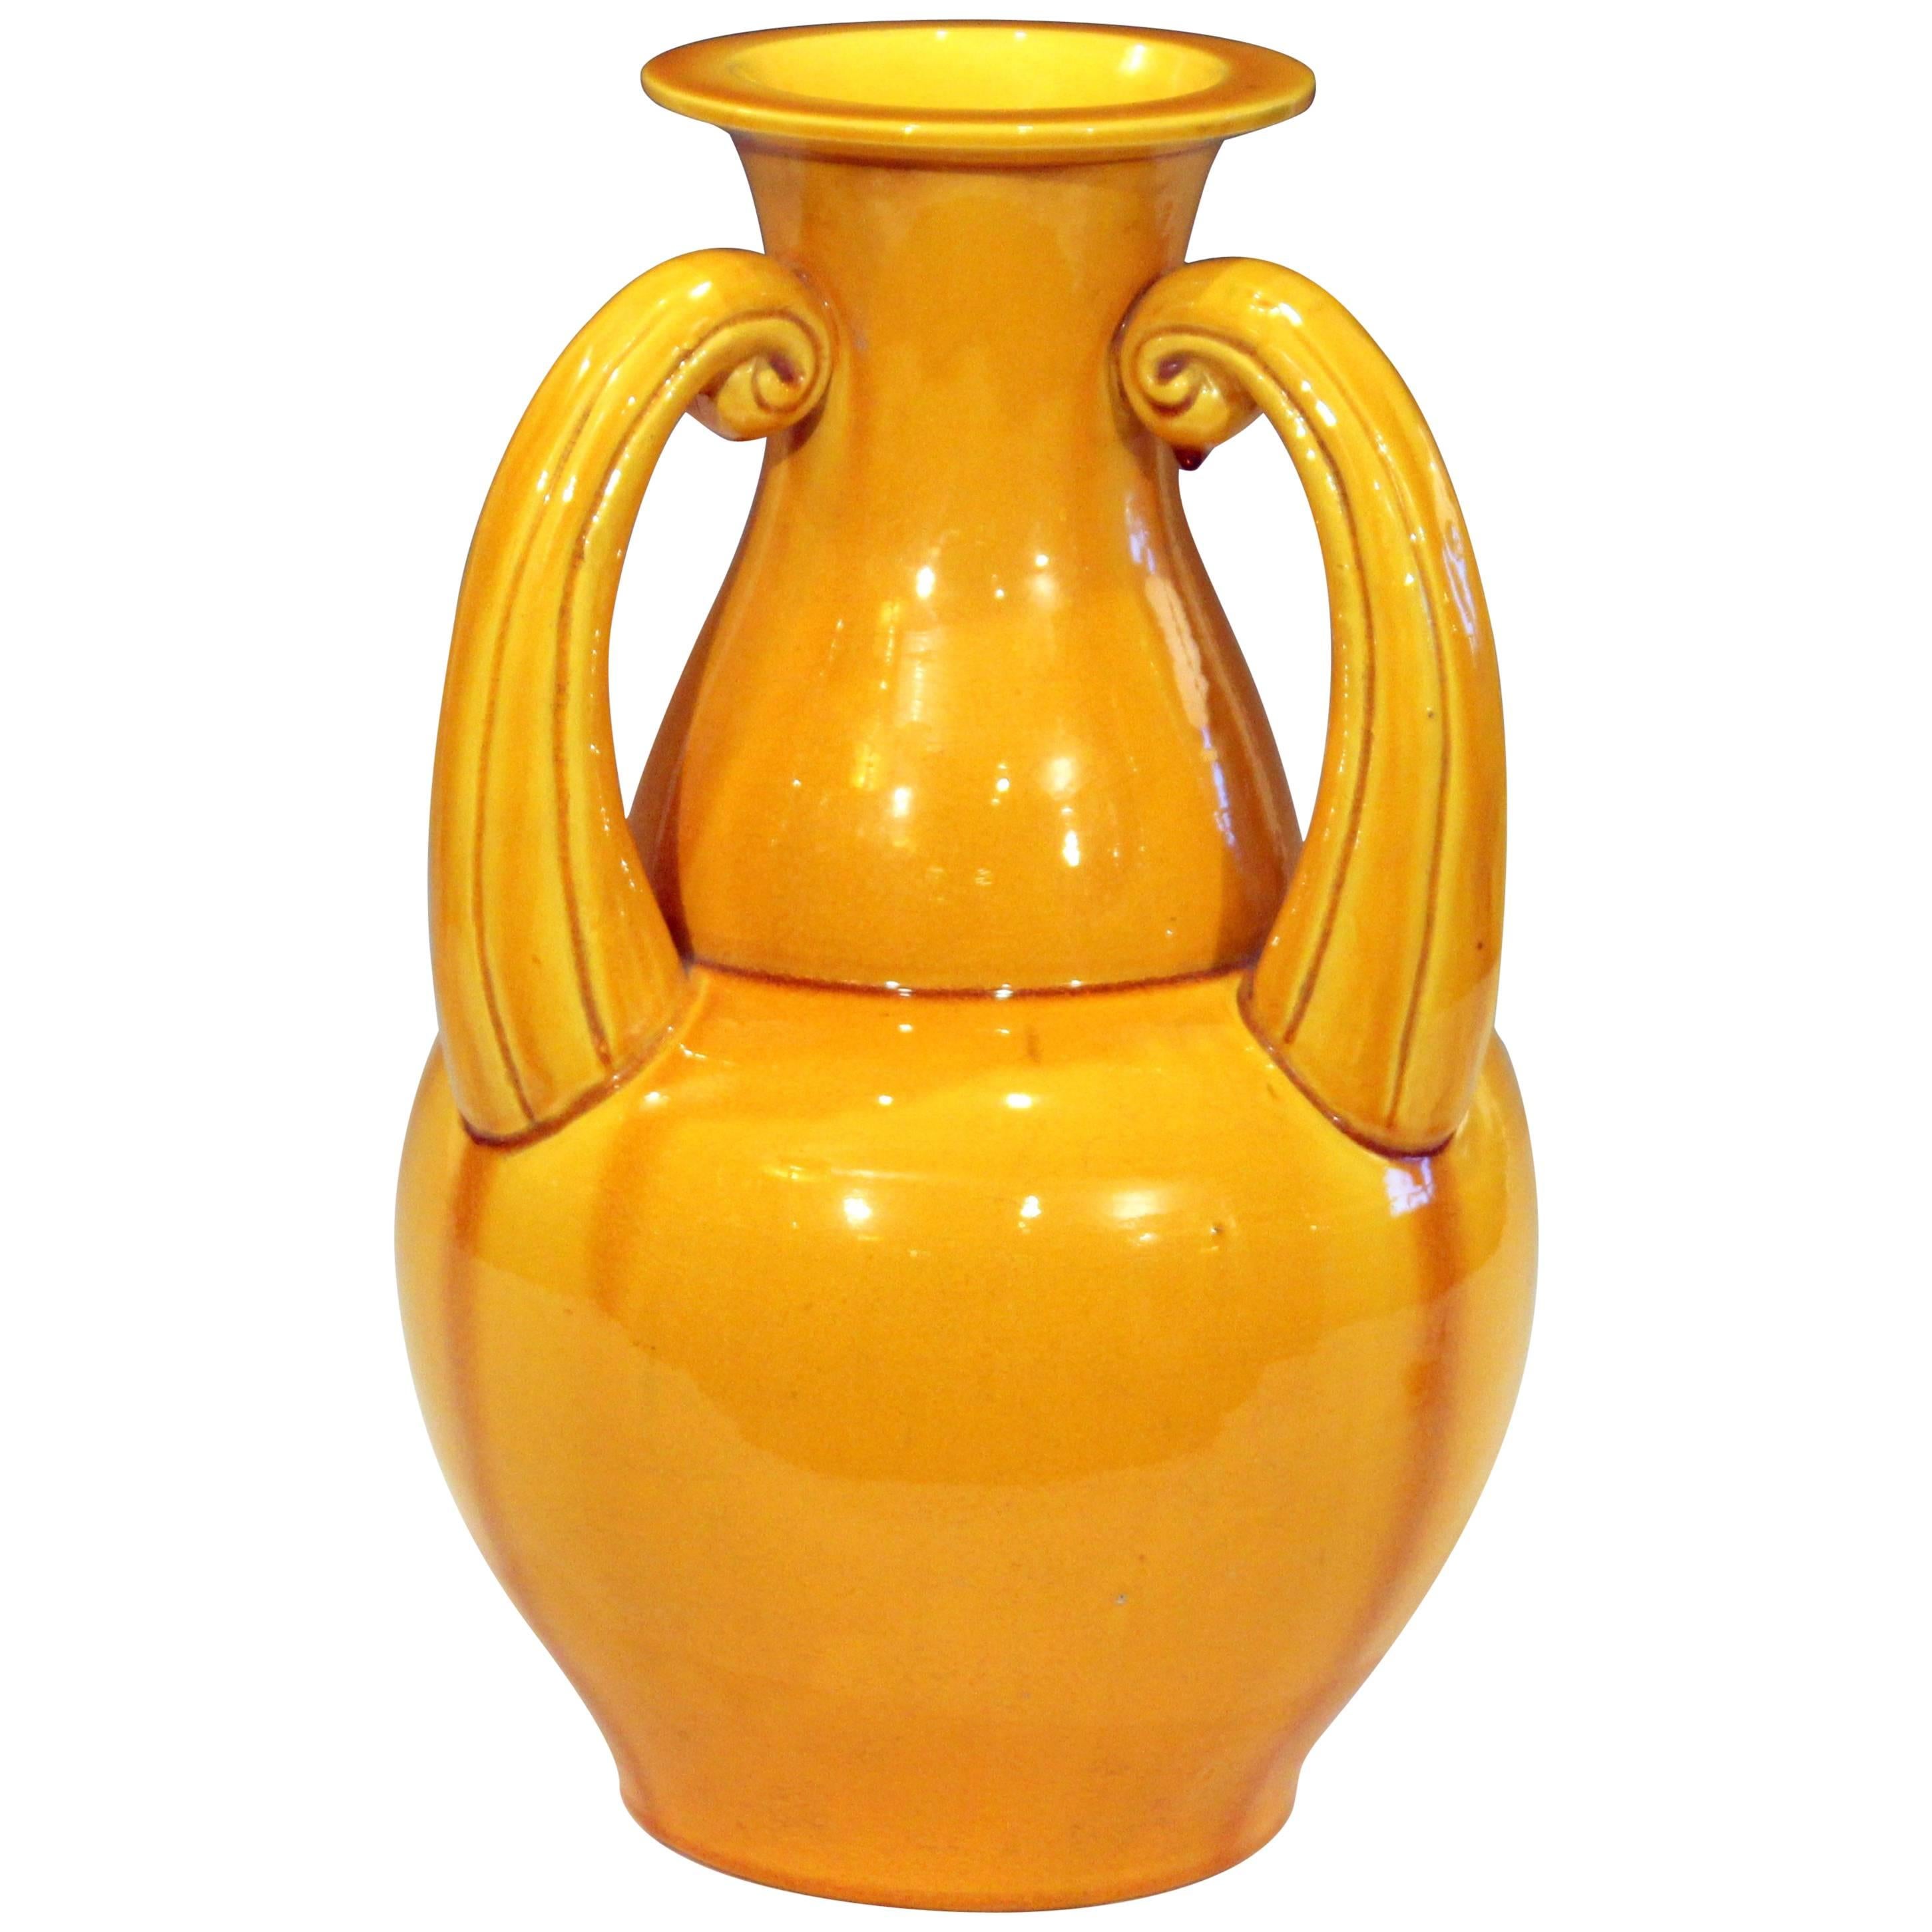 Awaji Pottery Vintage Japanese Studio Yellow Crackle Glaze Organic Gourd Vase For Sale